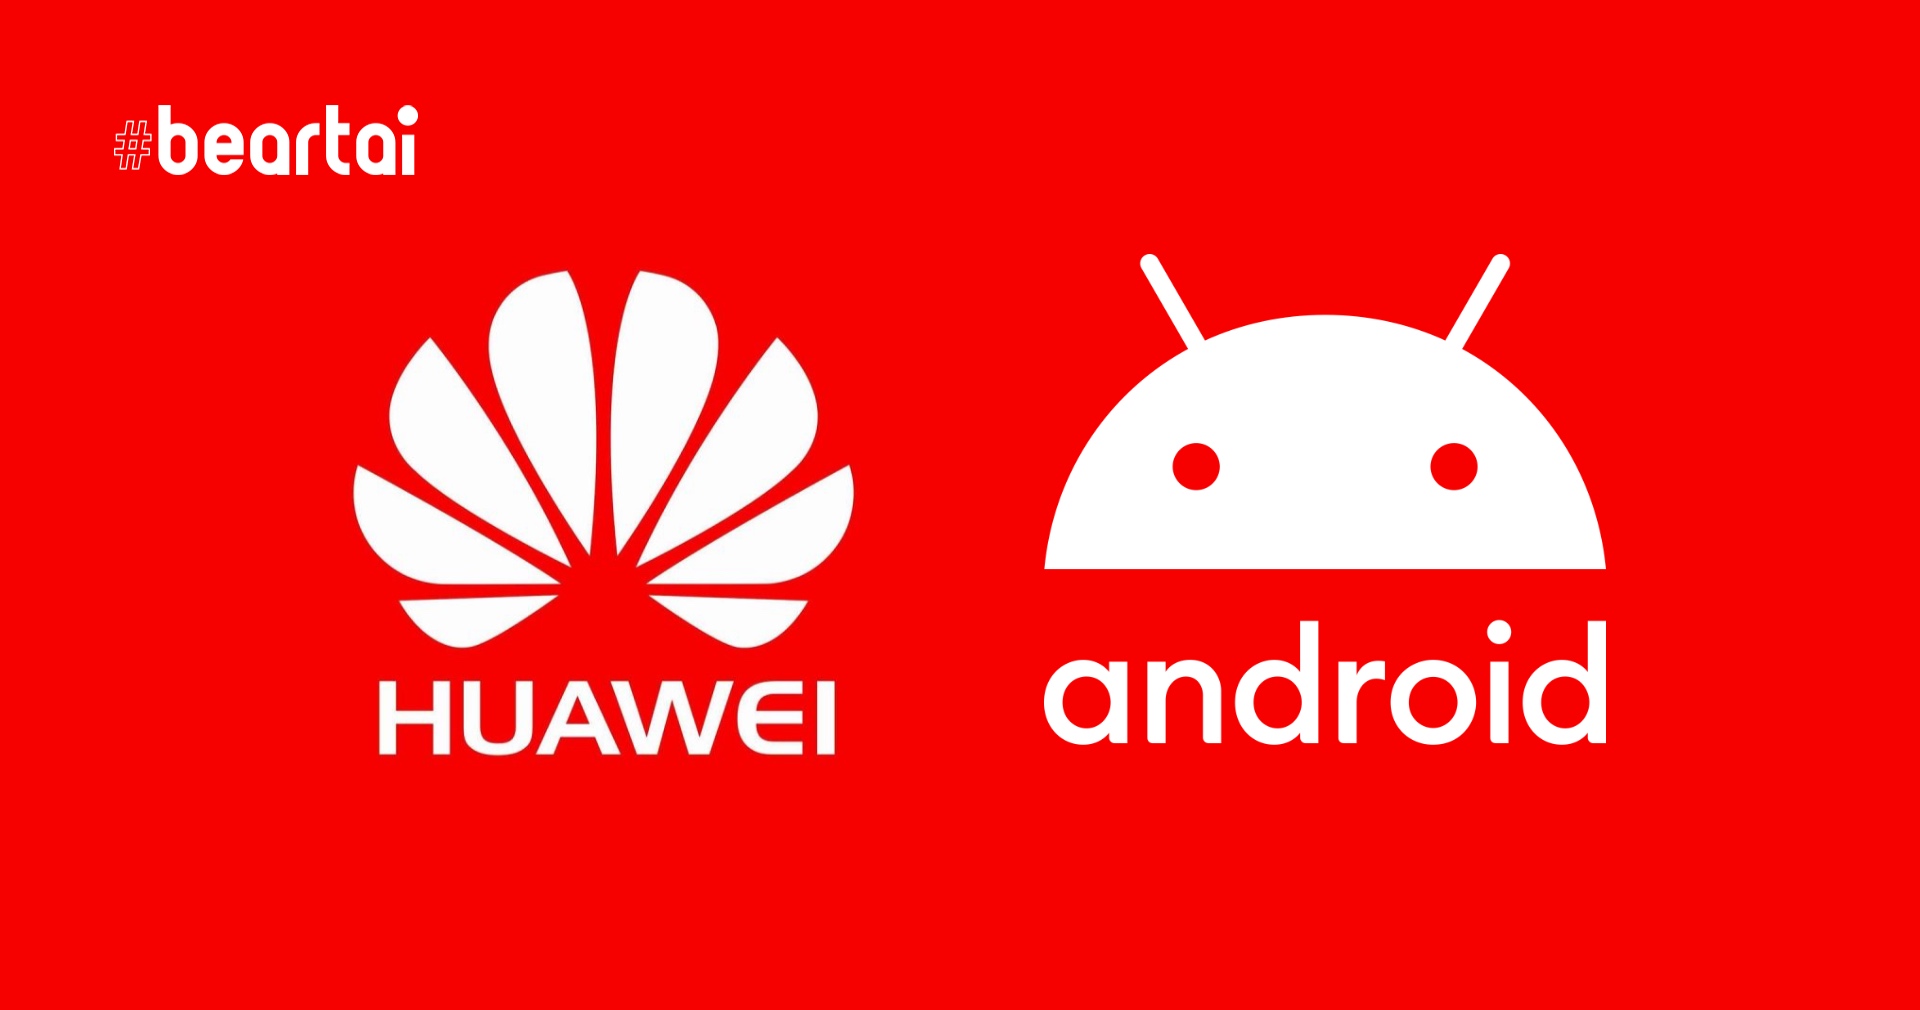 HarmonyOS ของ Huawei เดิมทีจะถูกสร้างใหม่ทั้งหมด ไม่เกี่ยวข้องกับ Android หรือ AOSP